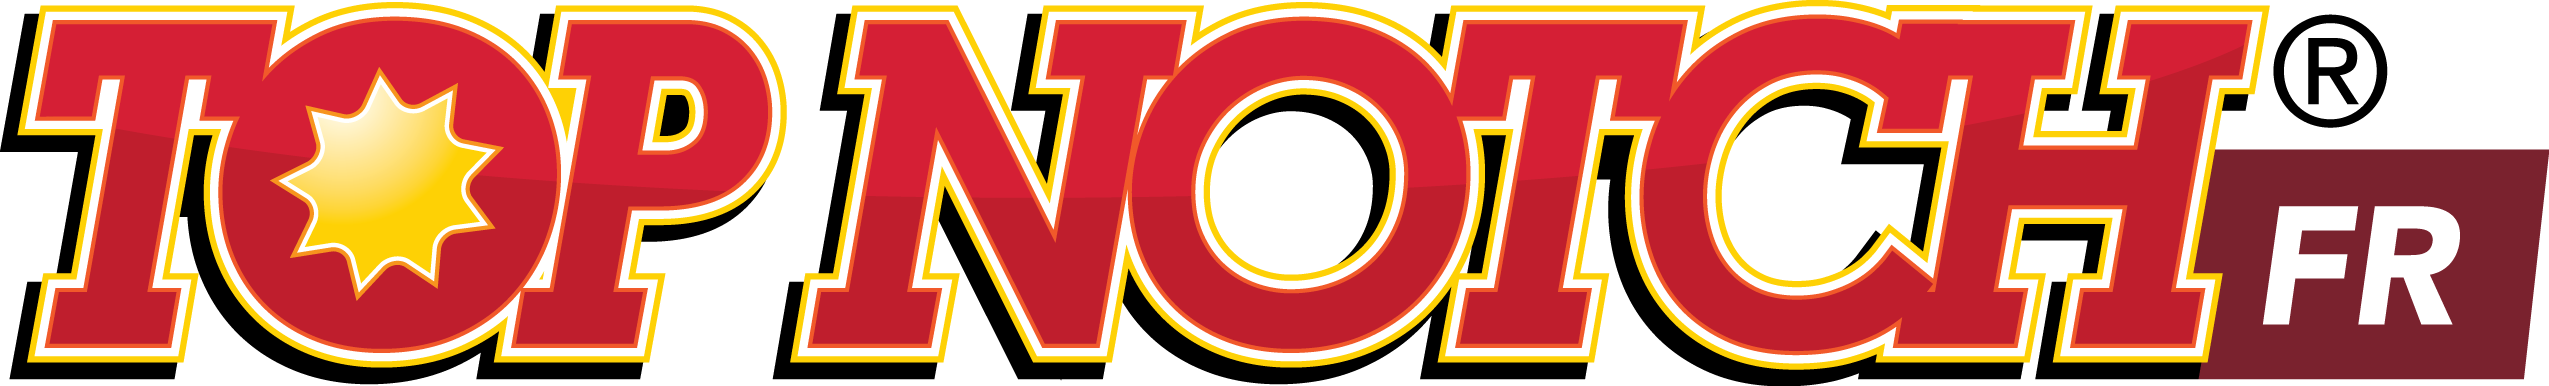 Top Notch FR Logo